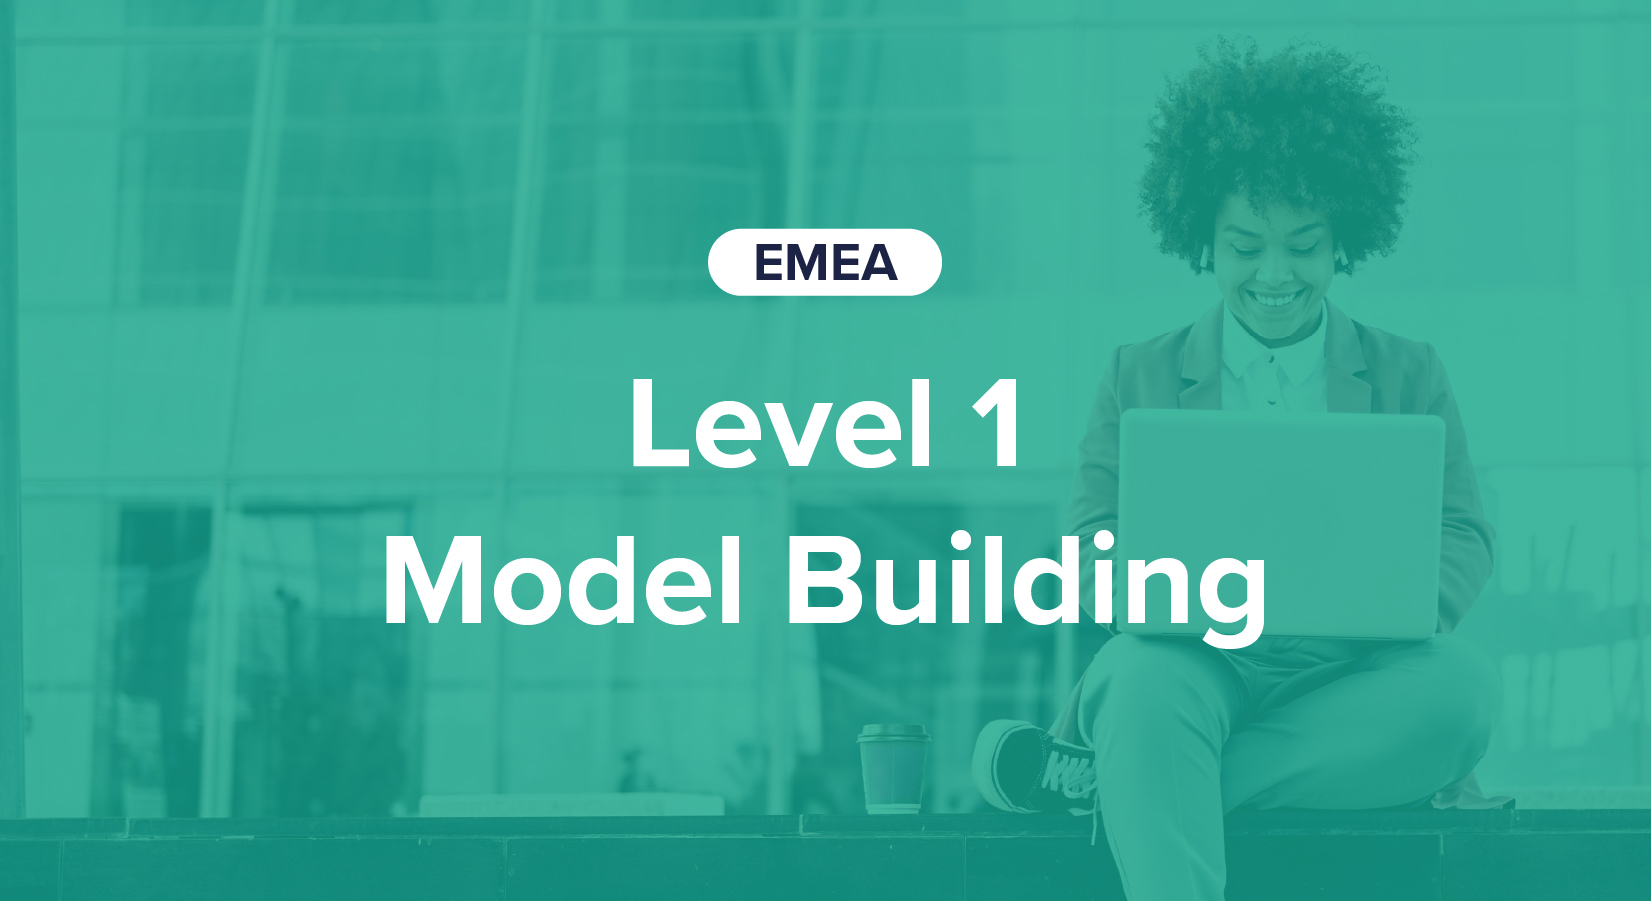 Academy Level 1 Model Building EMEA